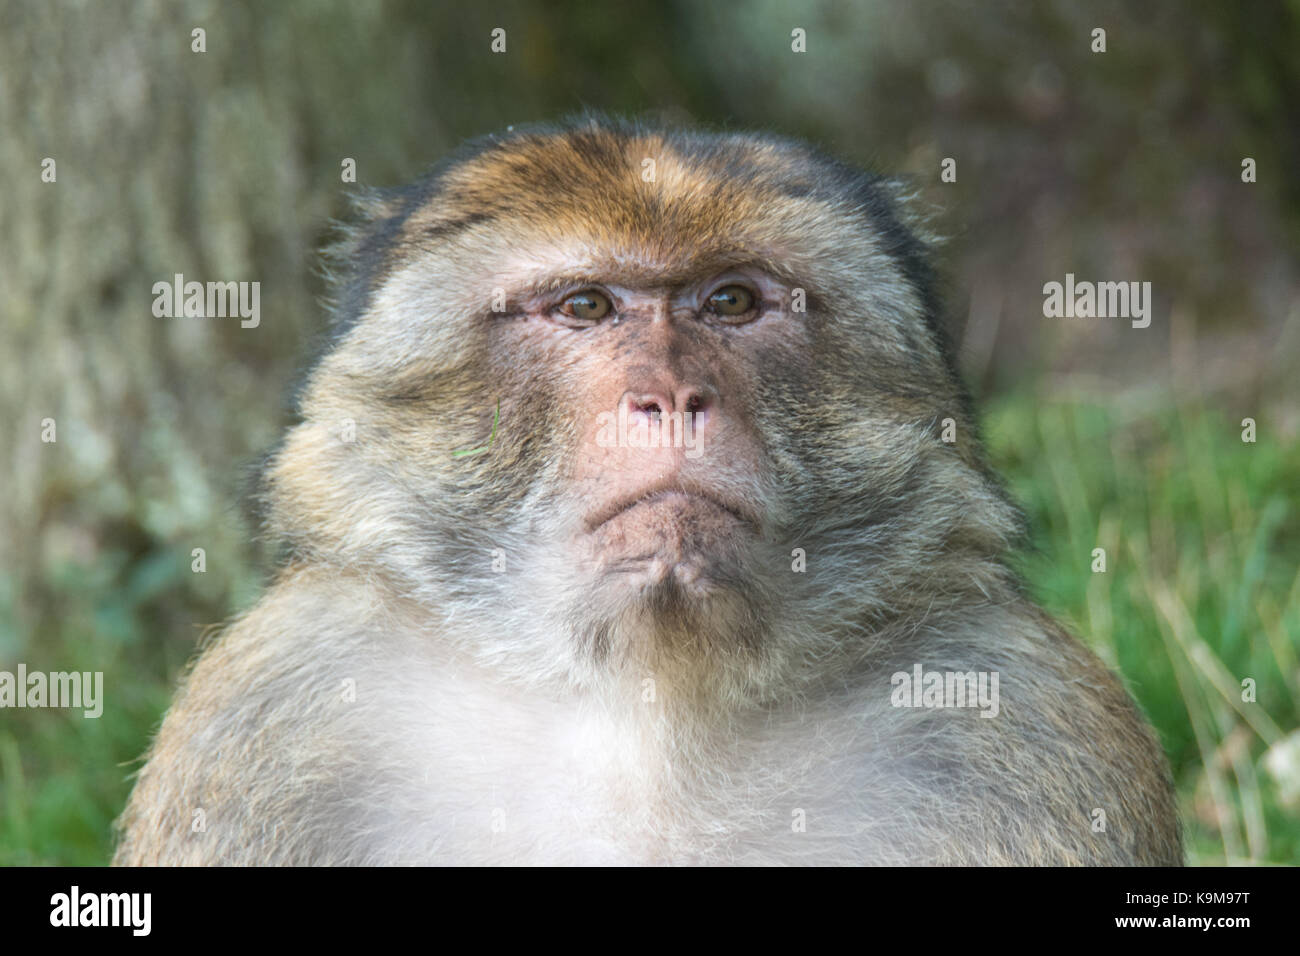 Monkey portrait Stock Photo